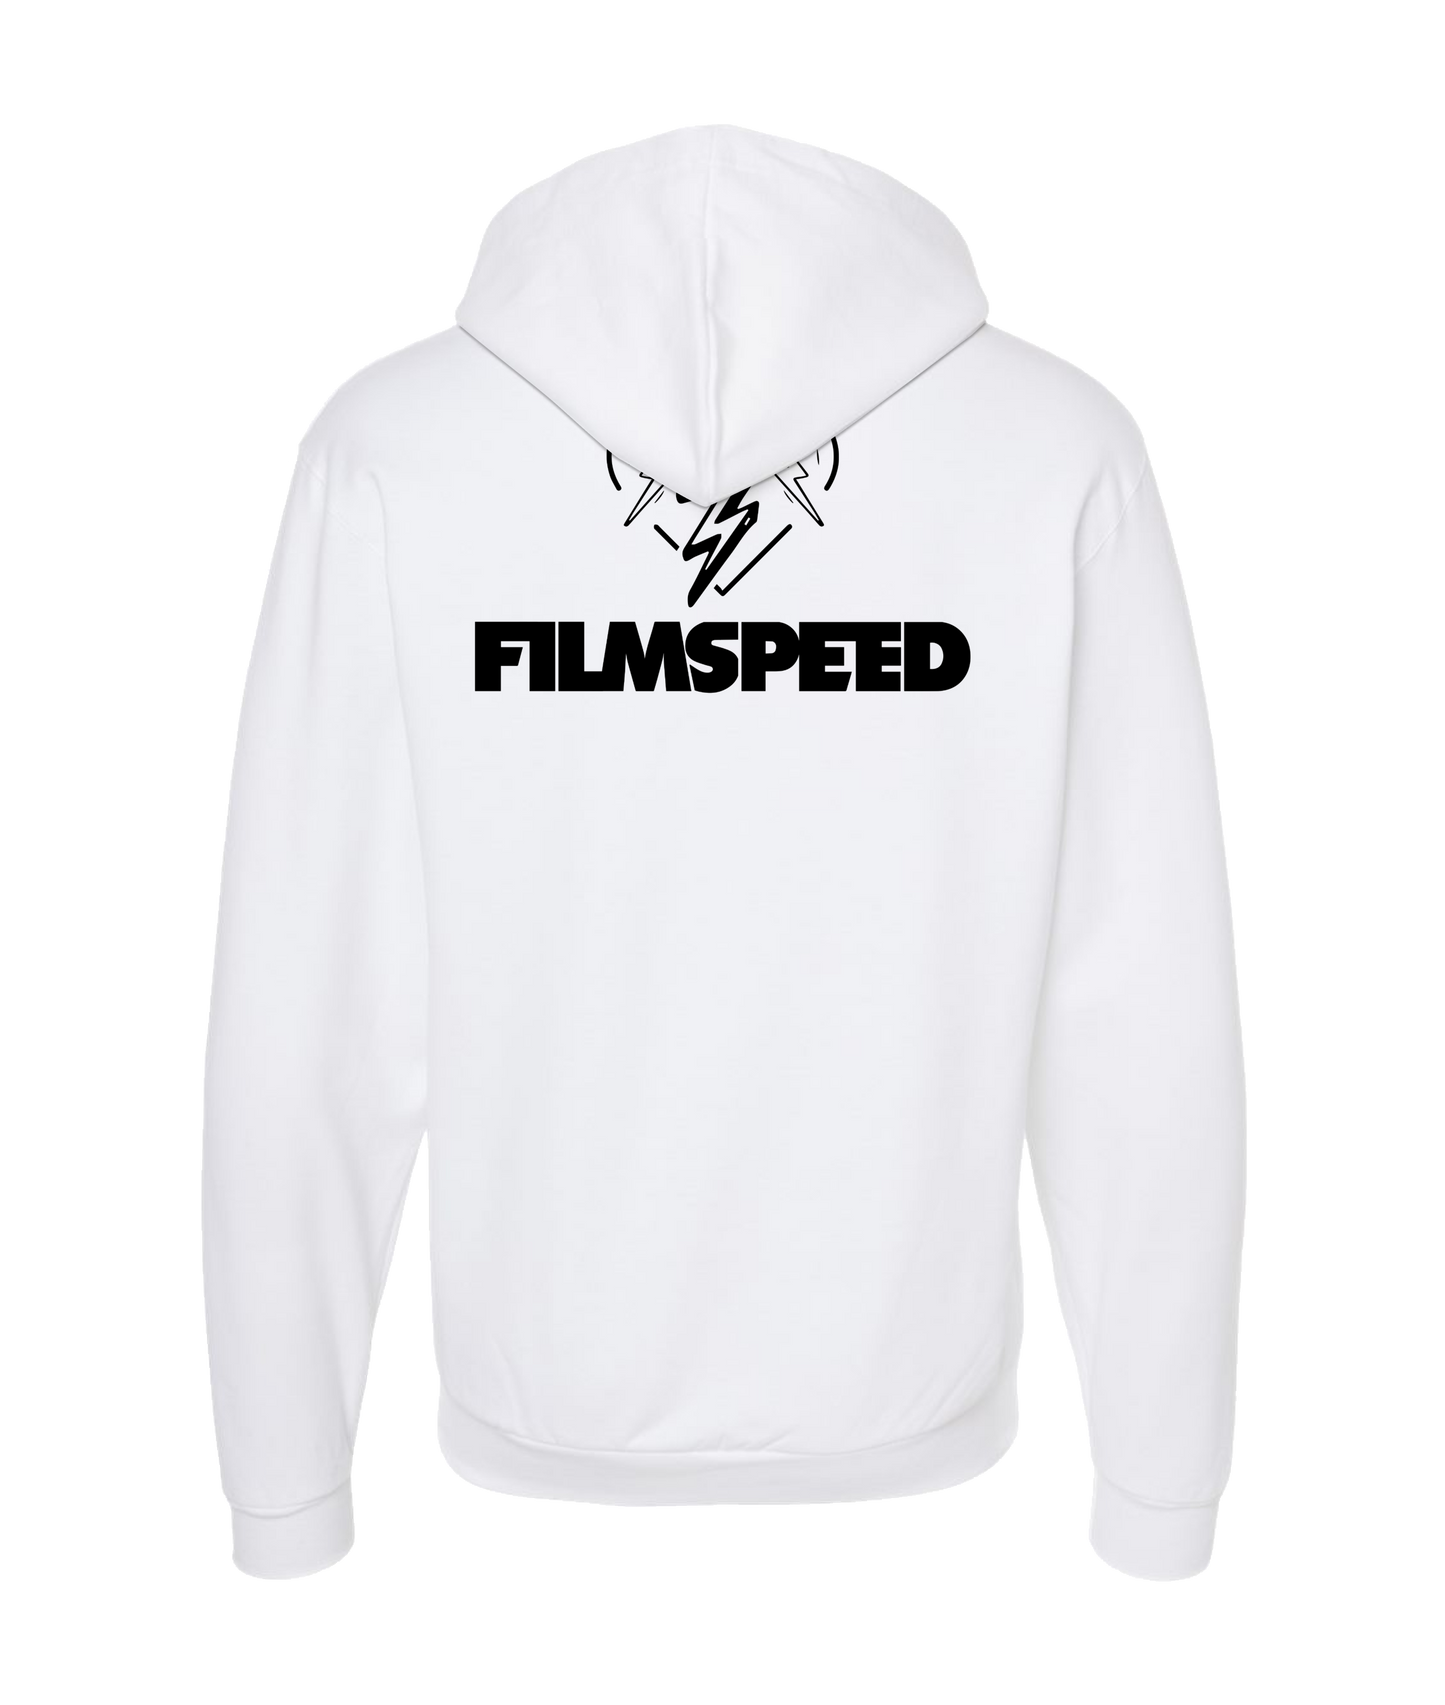 FILMSPEED - BOLT HEART - White Zip Up Hoodie